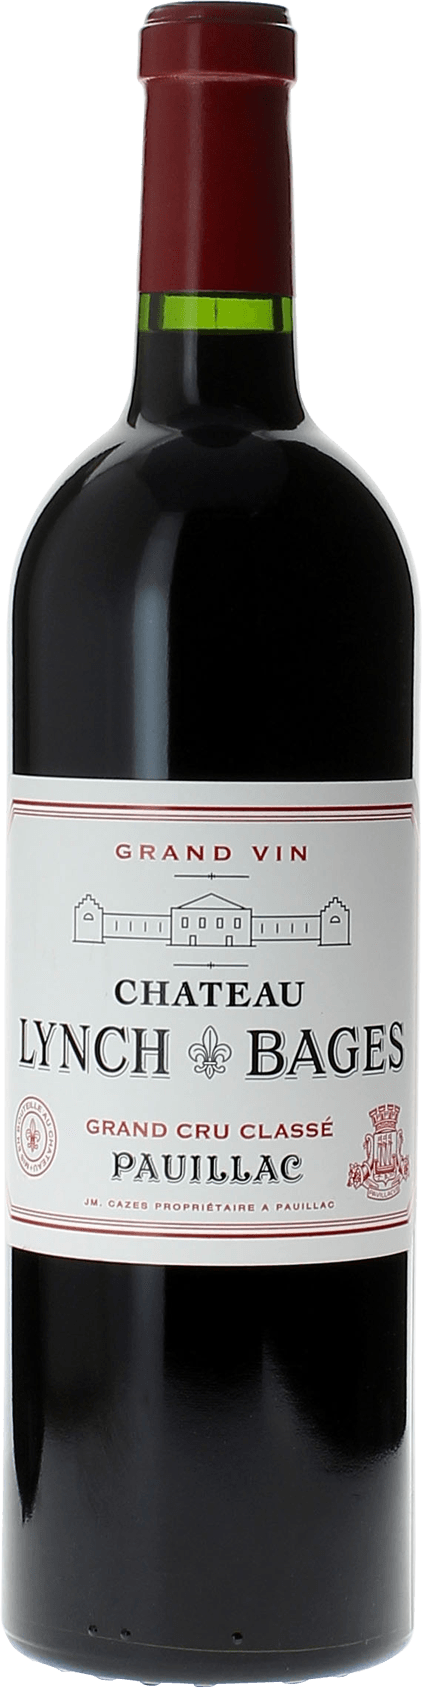 Lynch bages pauillac 2009 5 me Grand cru class Pauillac, Bordeaux rouge